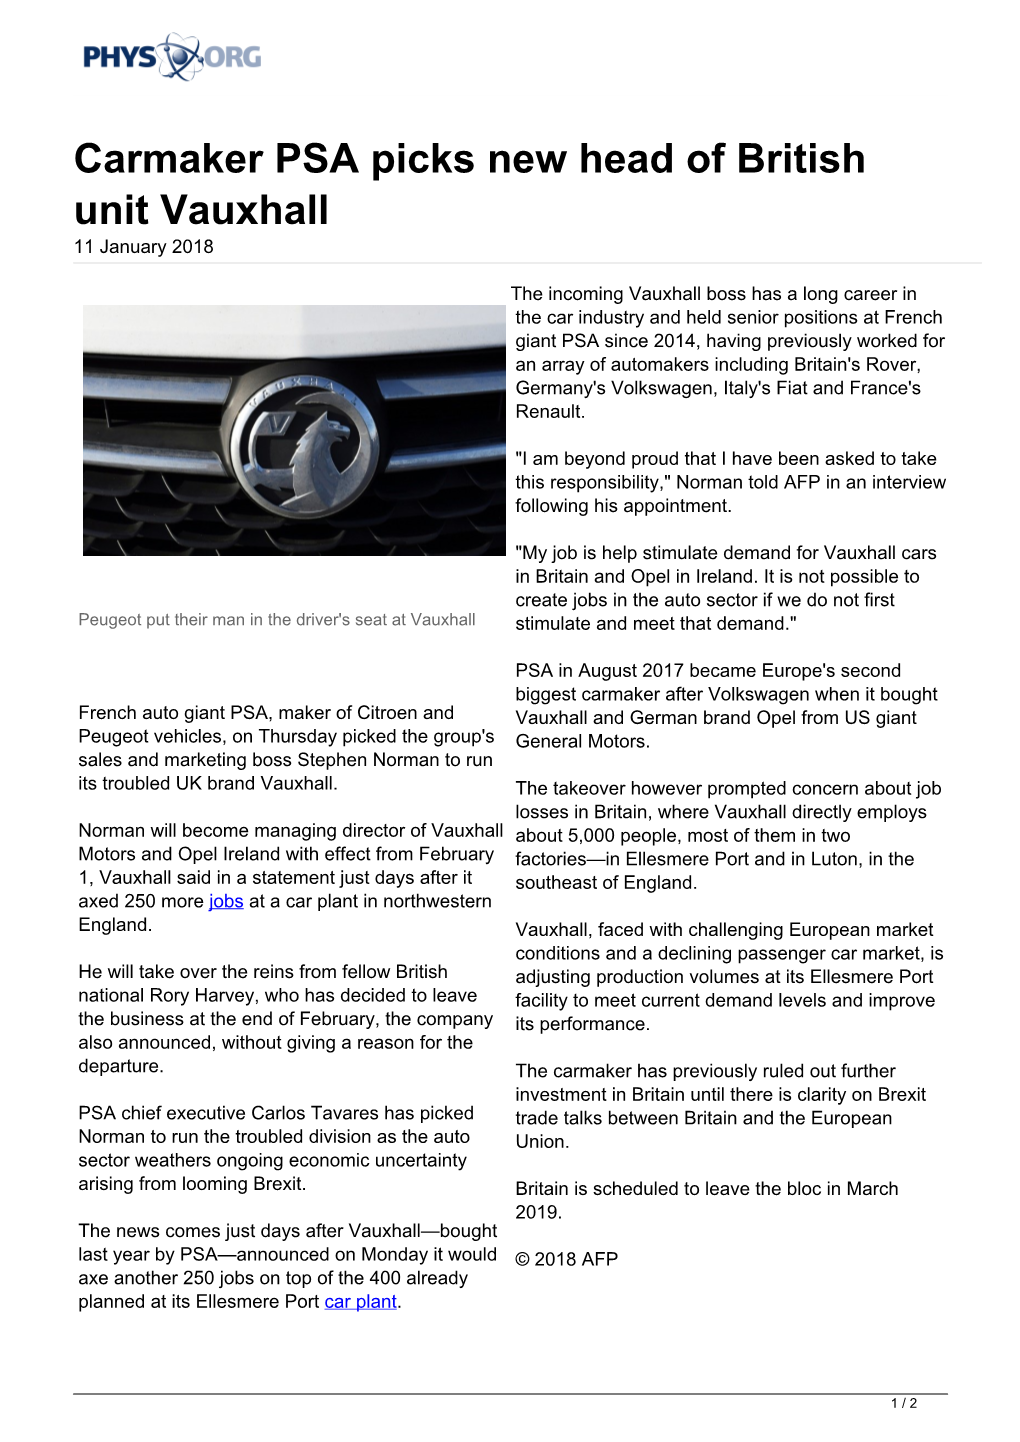 Carmaker PSA Picks New Head of British Unit Vauxhall 11 January 2018